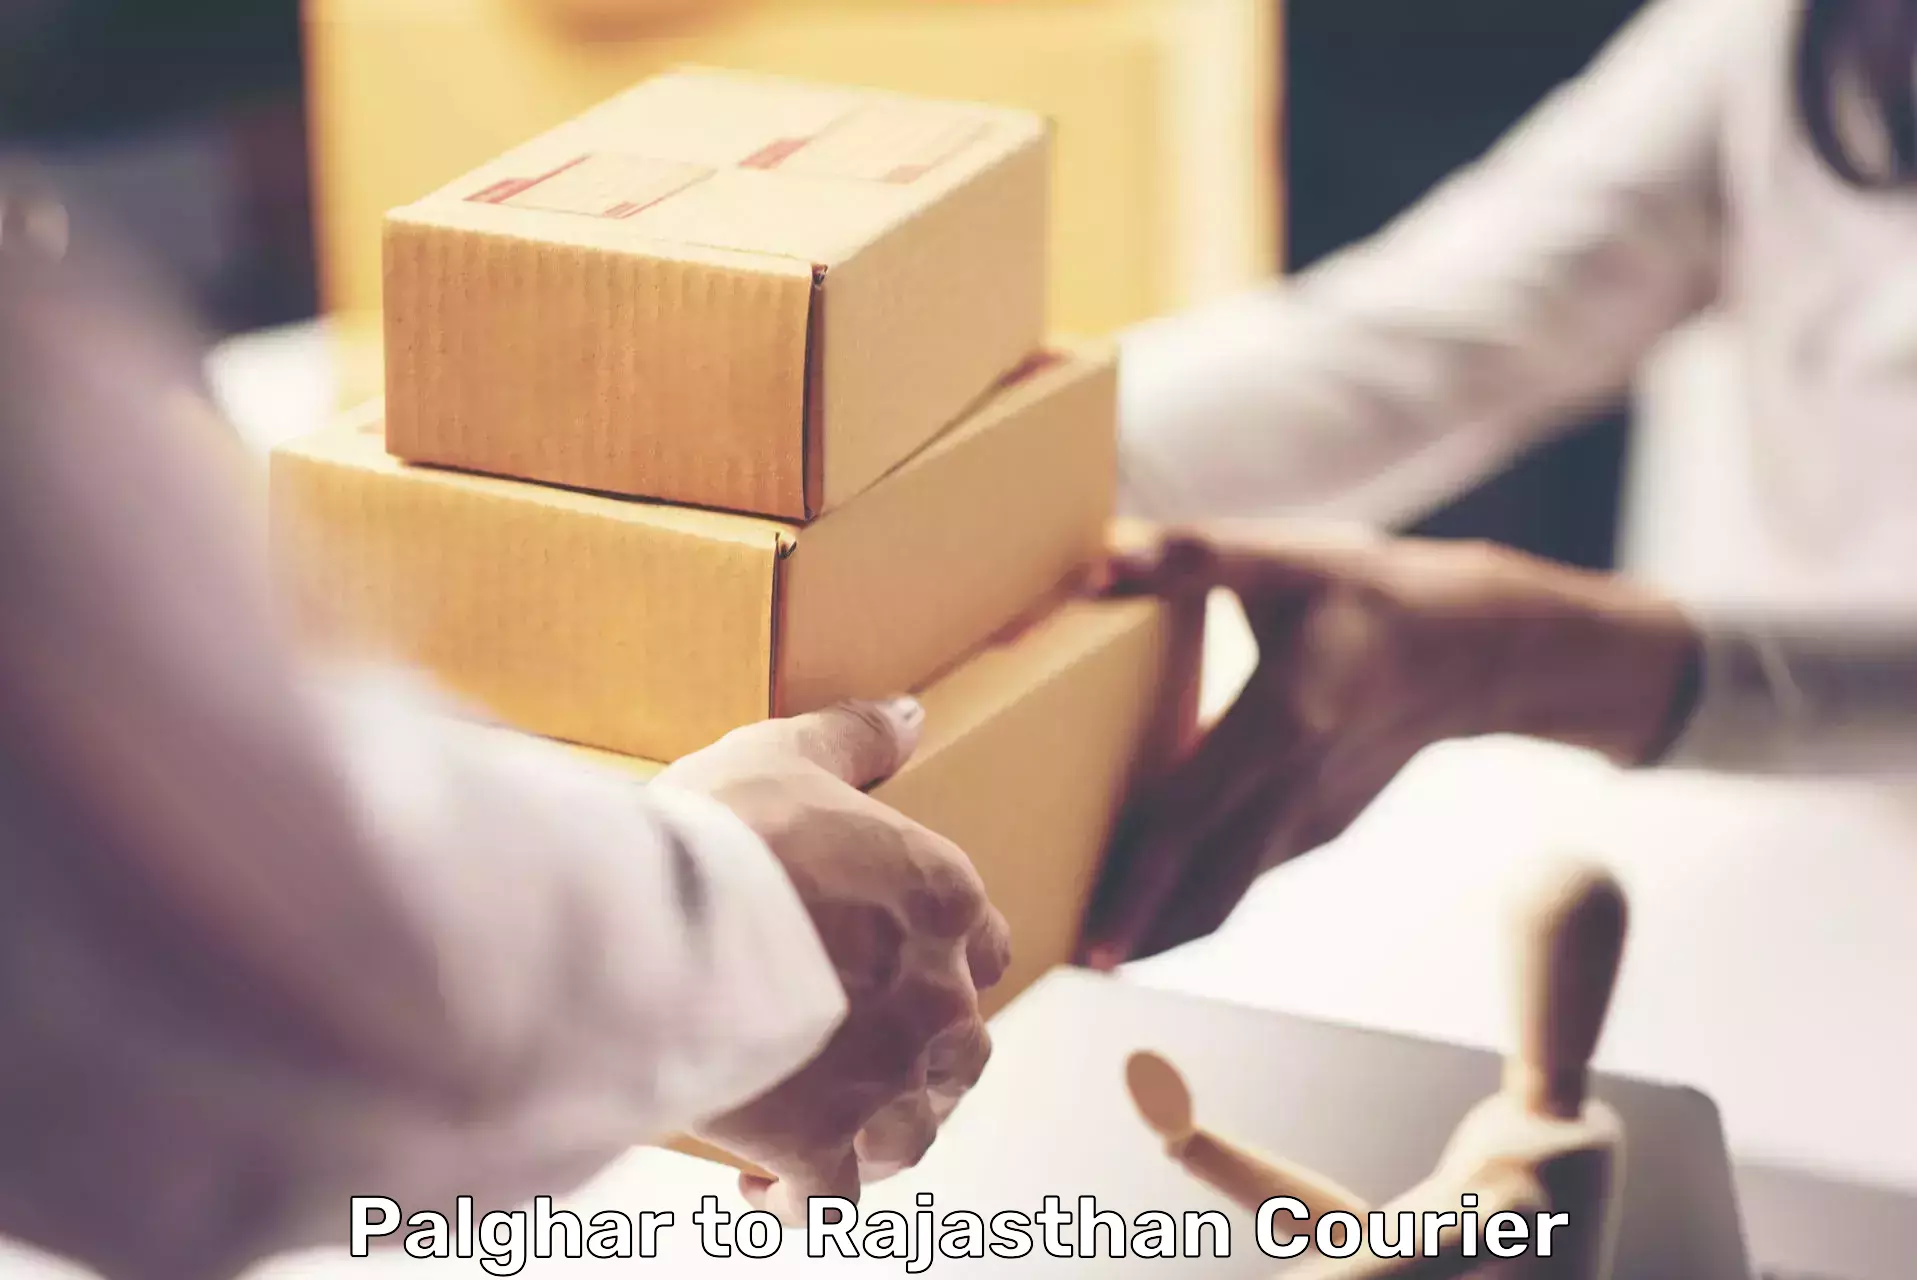 Logistics service provider Palghar to Rajasthan